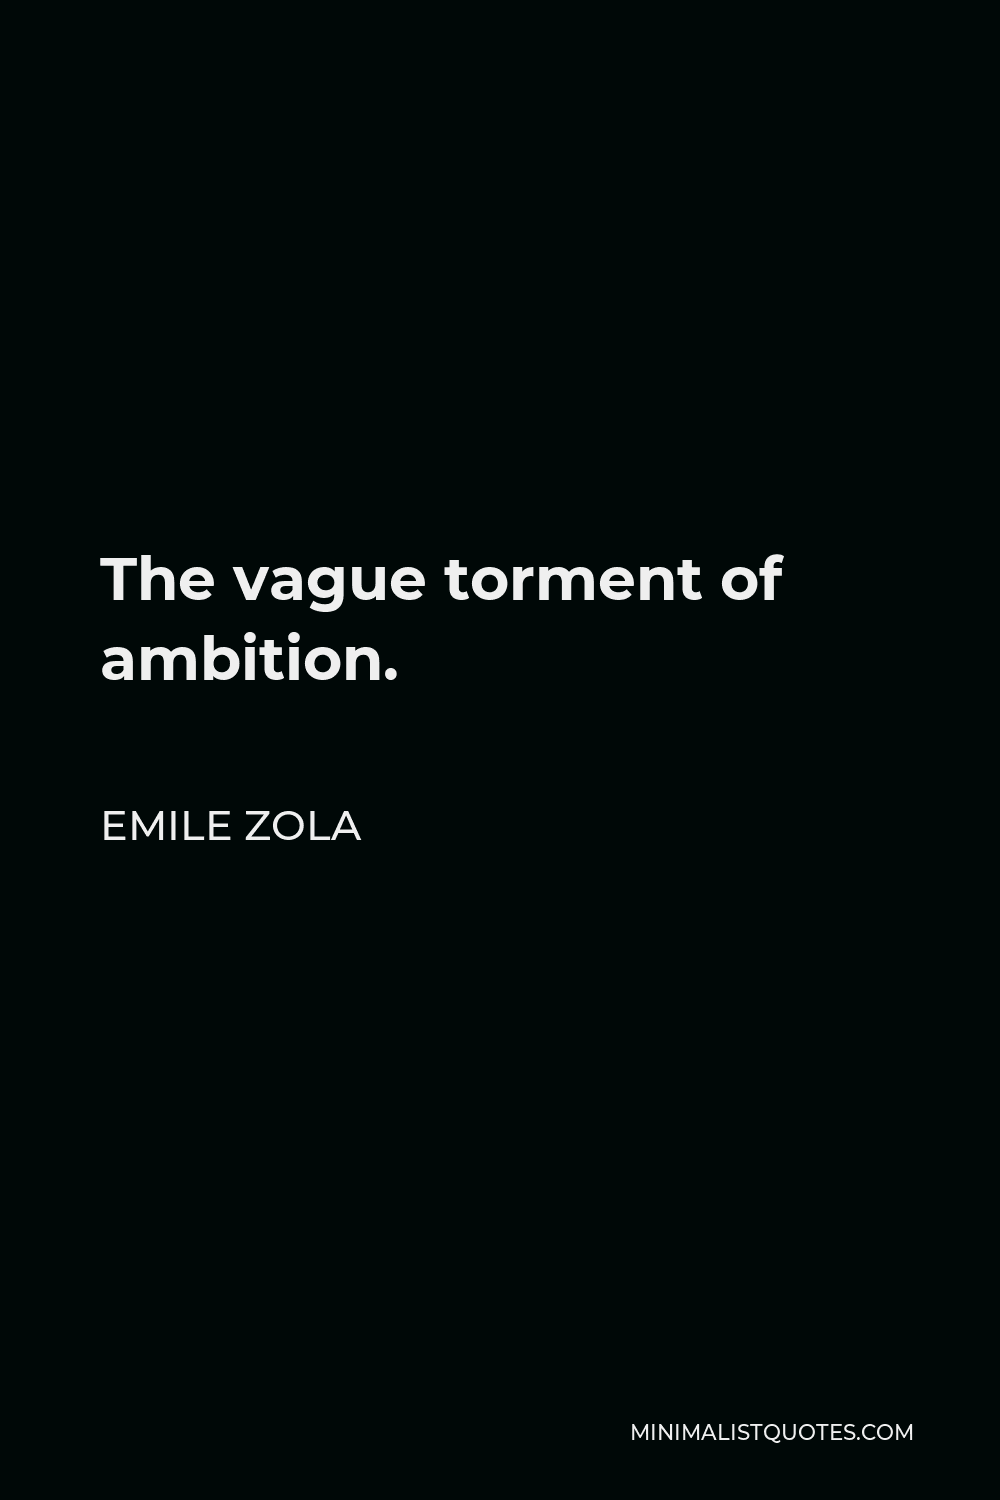 Emile Zola Quote - The vague torment of ambition.